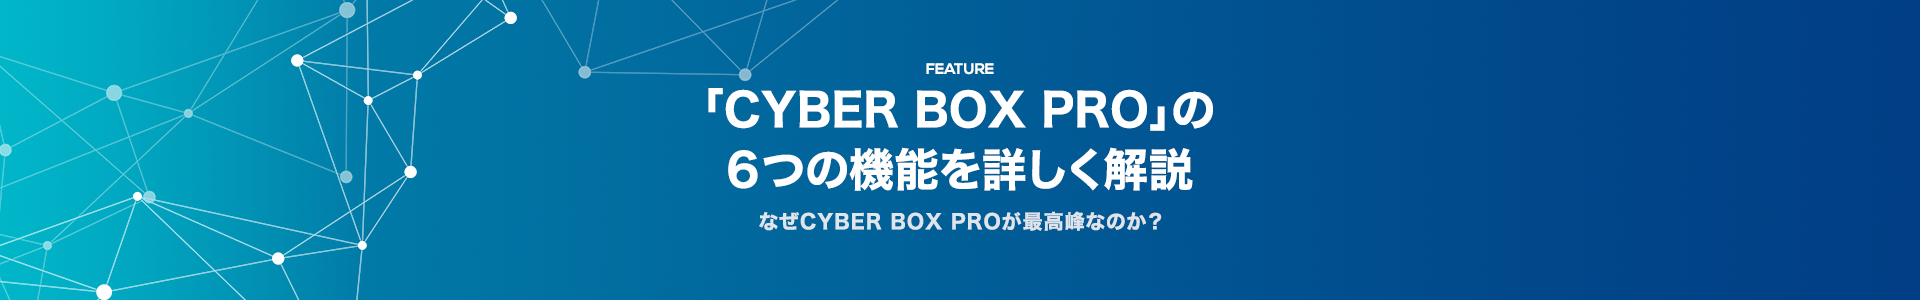 「CYBER BOX PRO」の６つの機能を詳しく解説 なぜCYBER BOX PROが最高峰なのか？